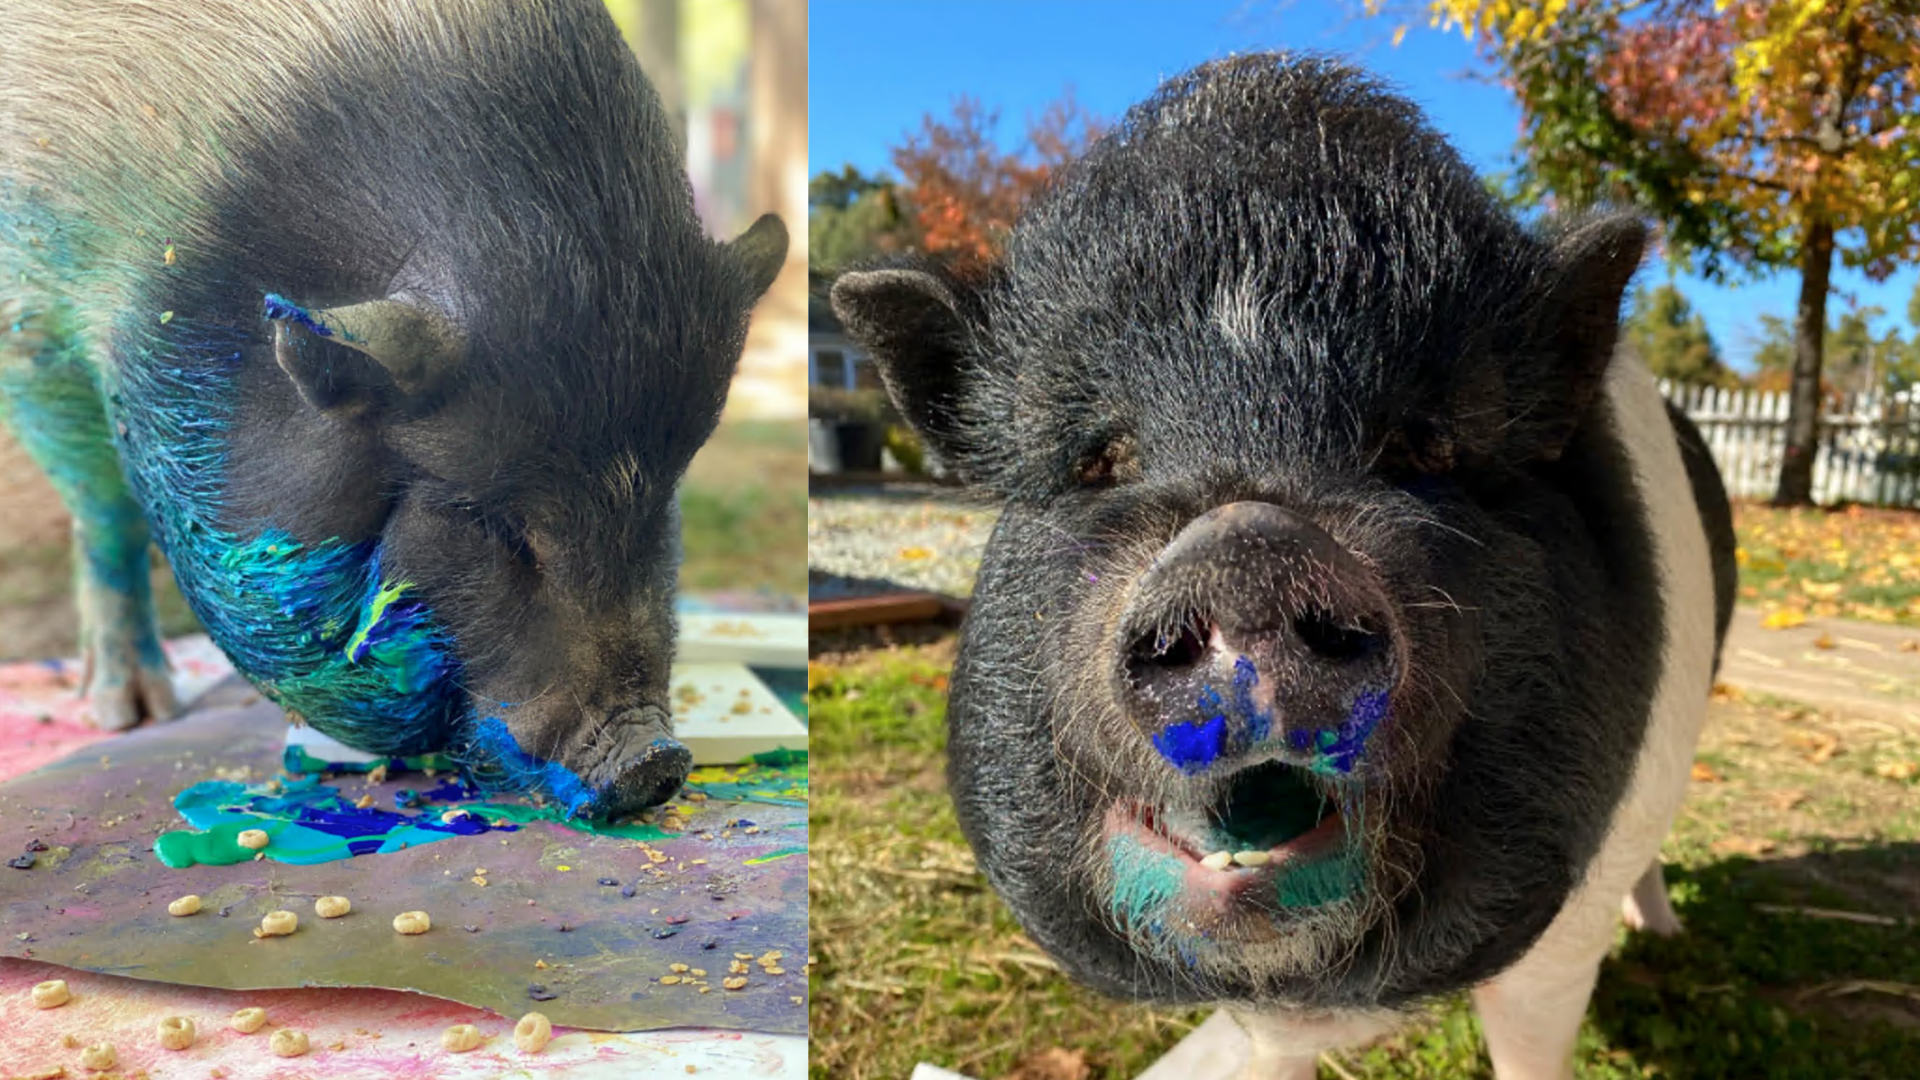 Pigcasso: Pot-Bellied Pig Produces Award-Winning Art In Mokelumne Hill -  CBS Sacramento